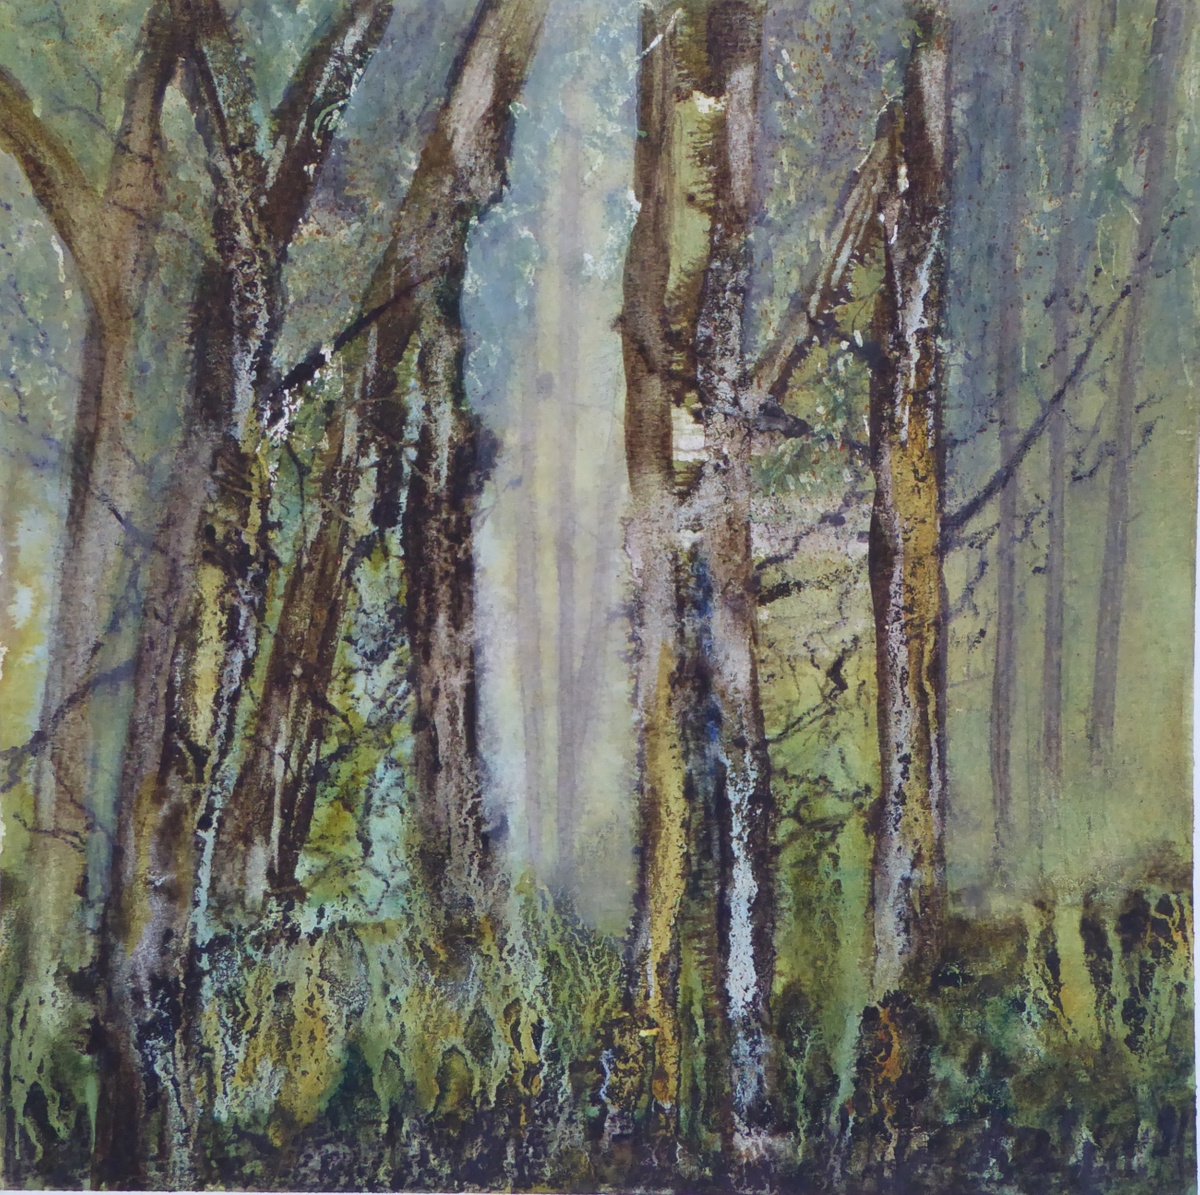 Twilight Woods by Sue Roe